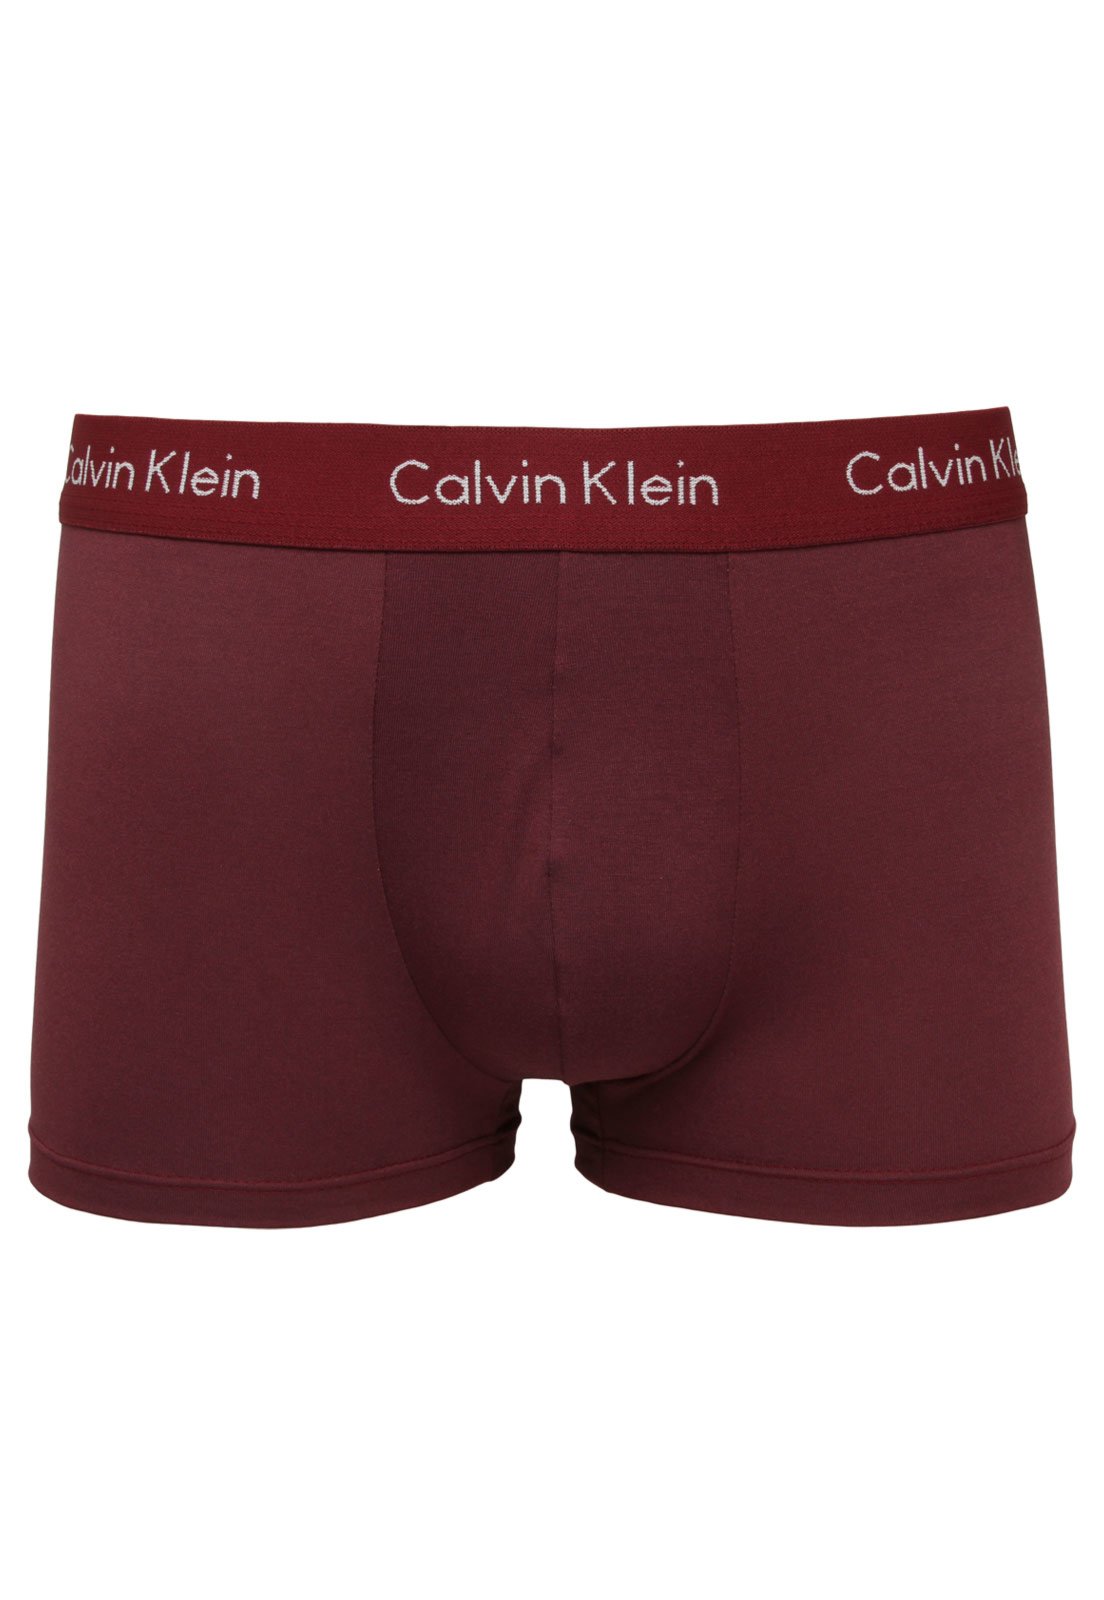 https://static.dafiti.com.br/p/Calvin-Klein-Underwear-Cueca-Calvin-Klein-Underwear-Boxer-Logo-Vinho-4967-6278963-1-zoom.jpg